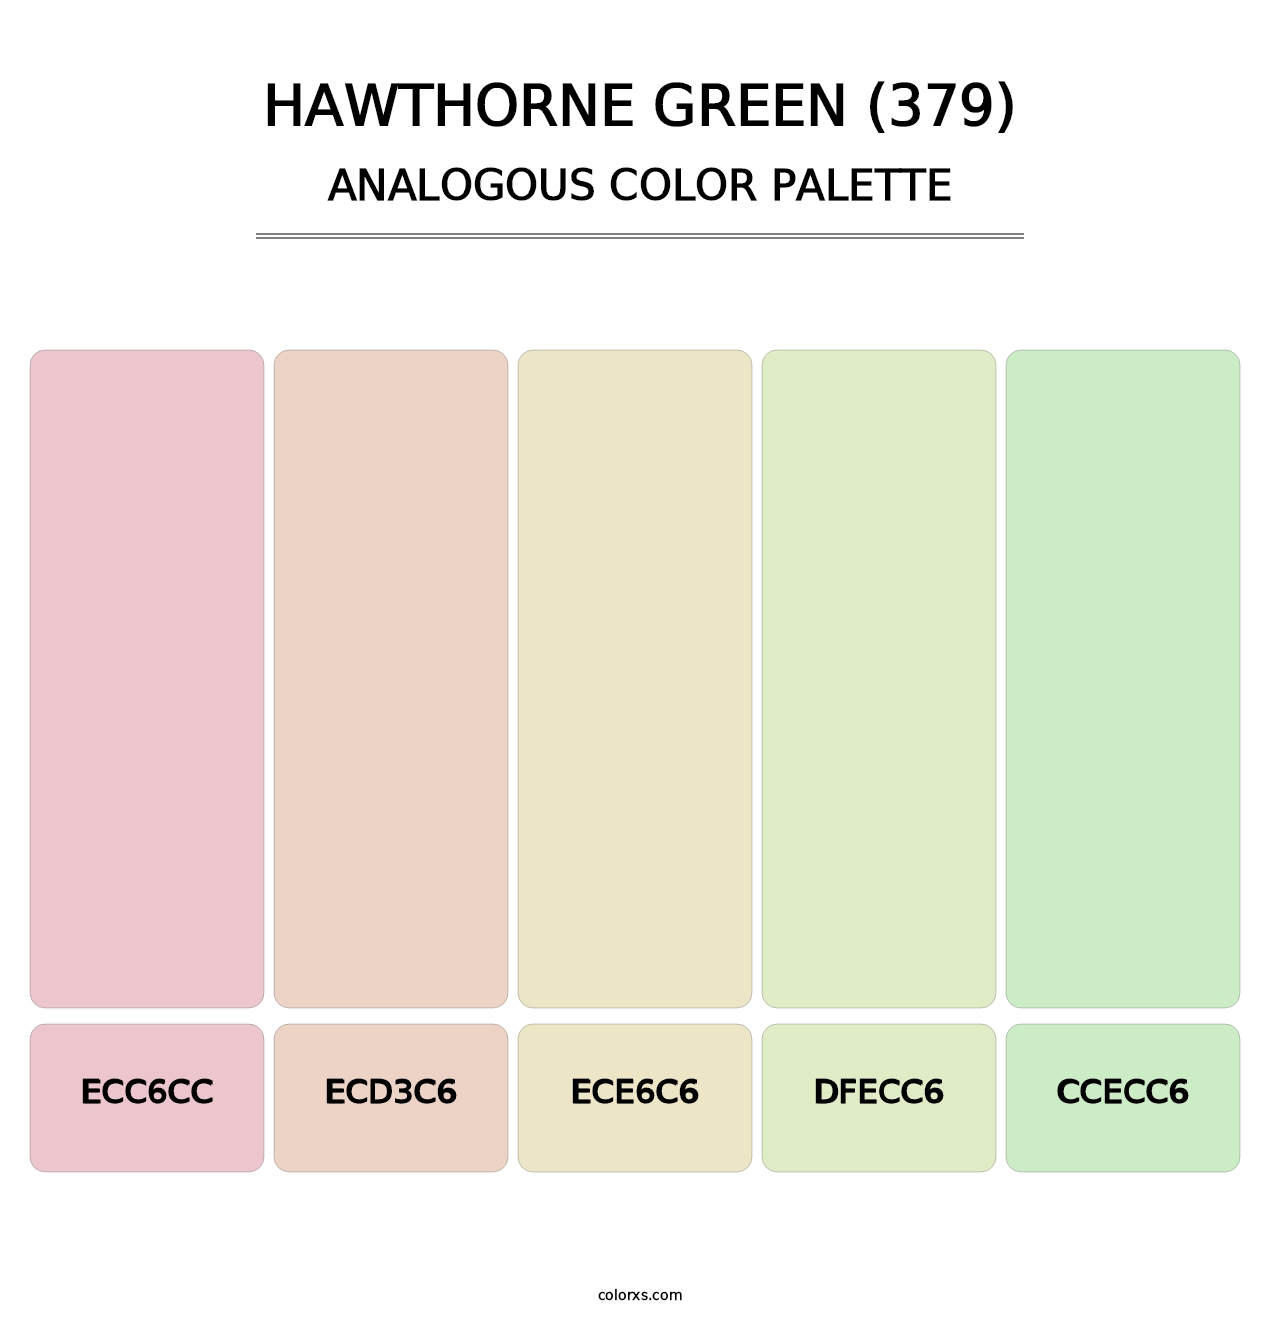 Hawthorne Green (379) - Analogous Color Palette